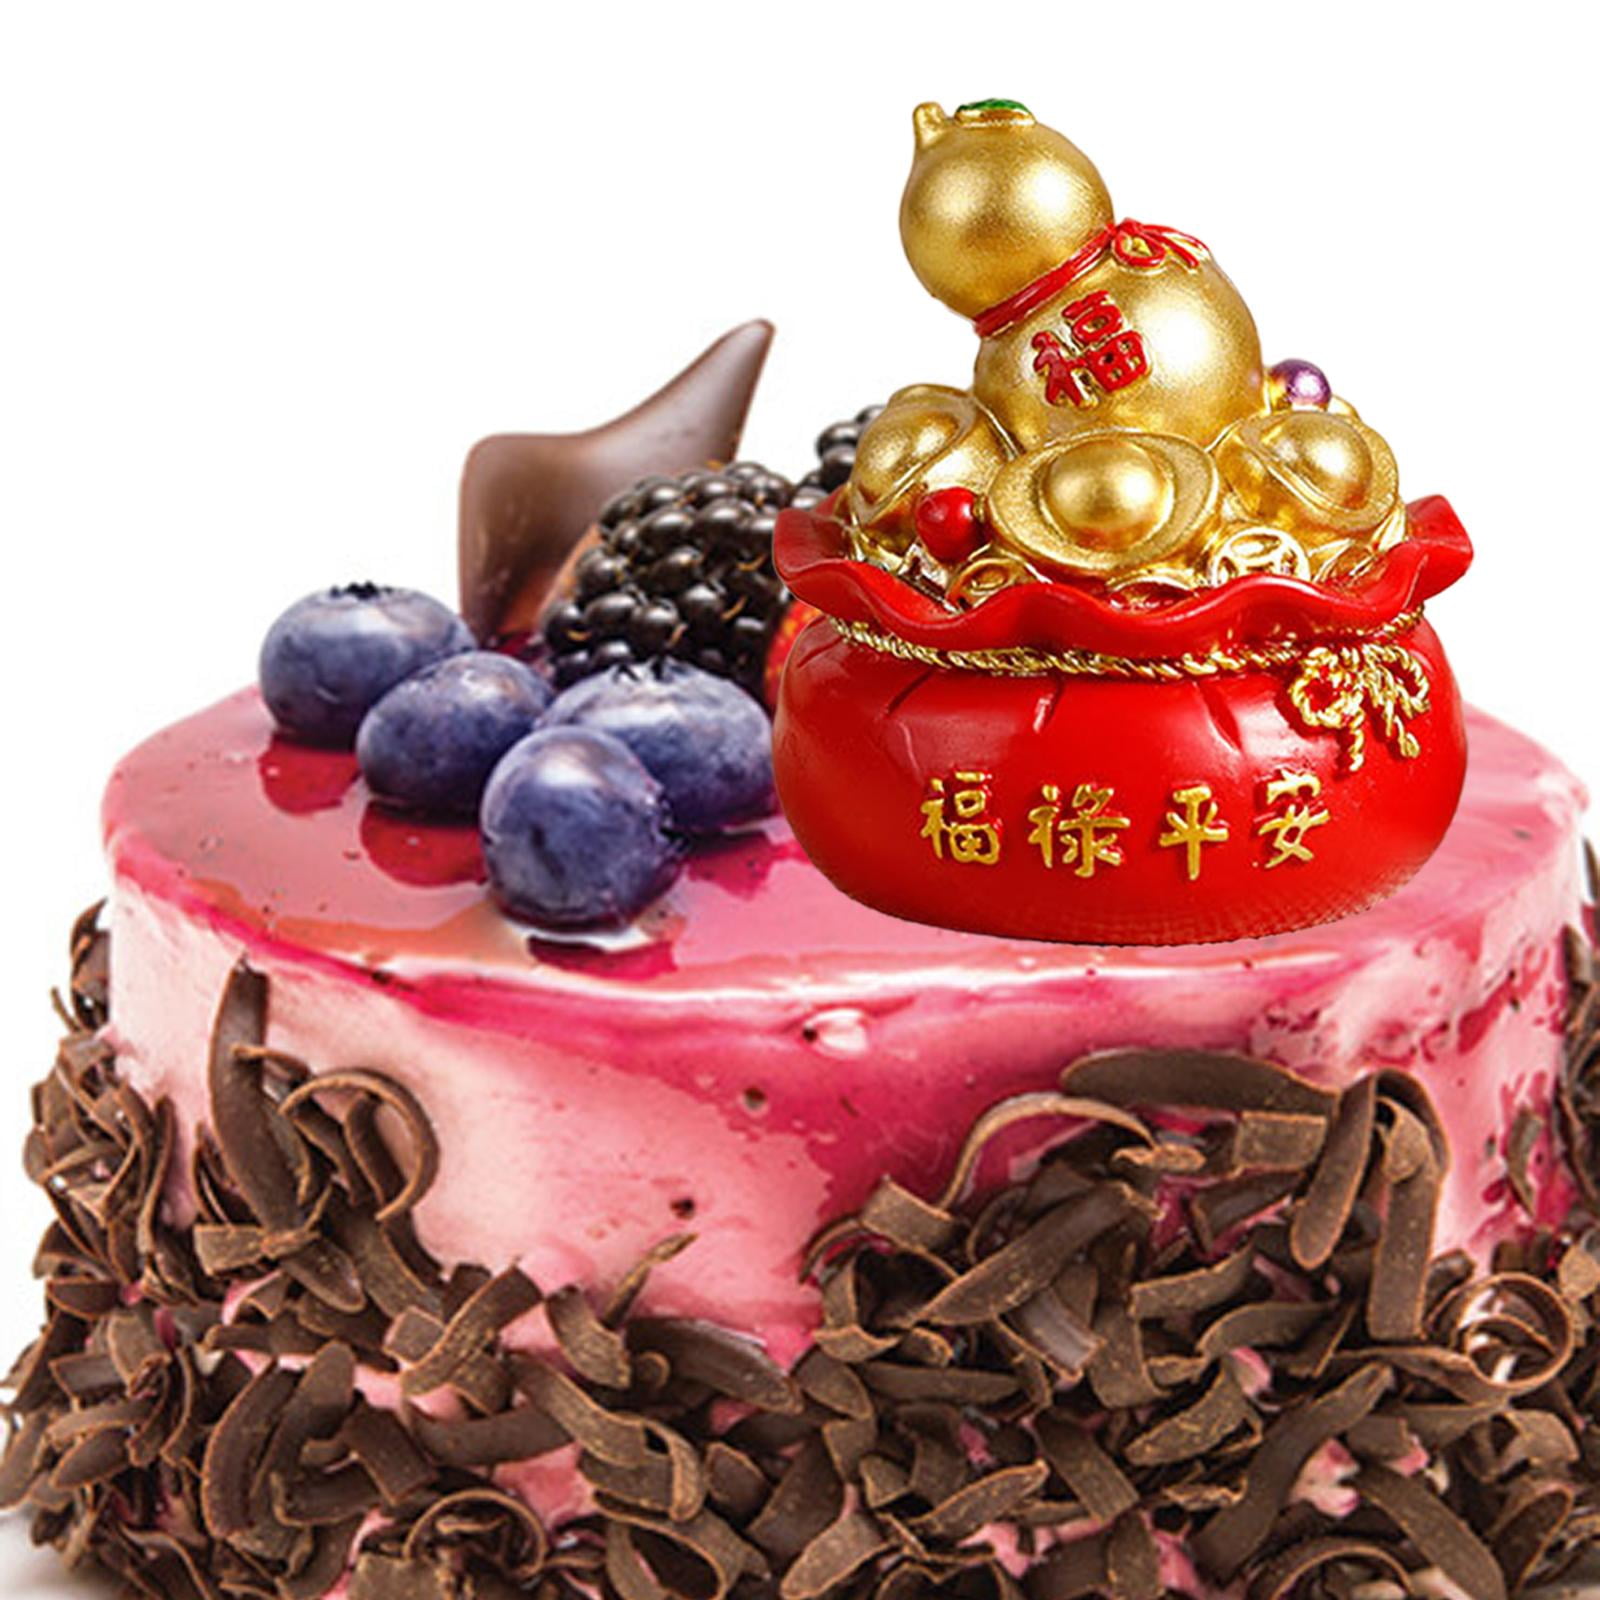 Feng Shui Birthday Baking Cake Dress Up Decorating for Car | eBay